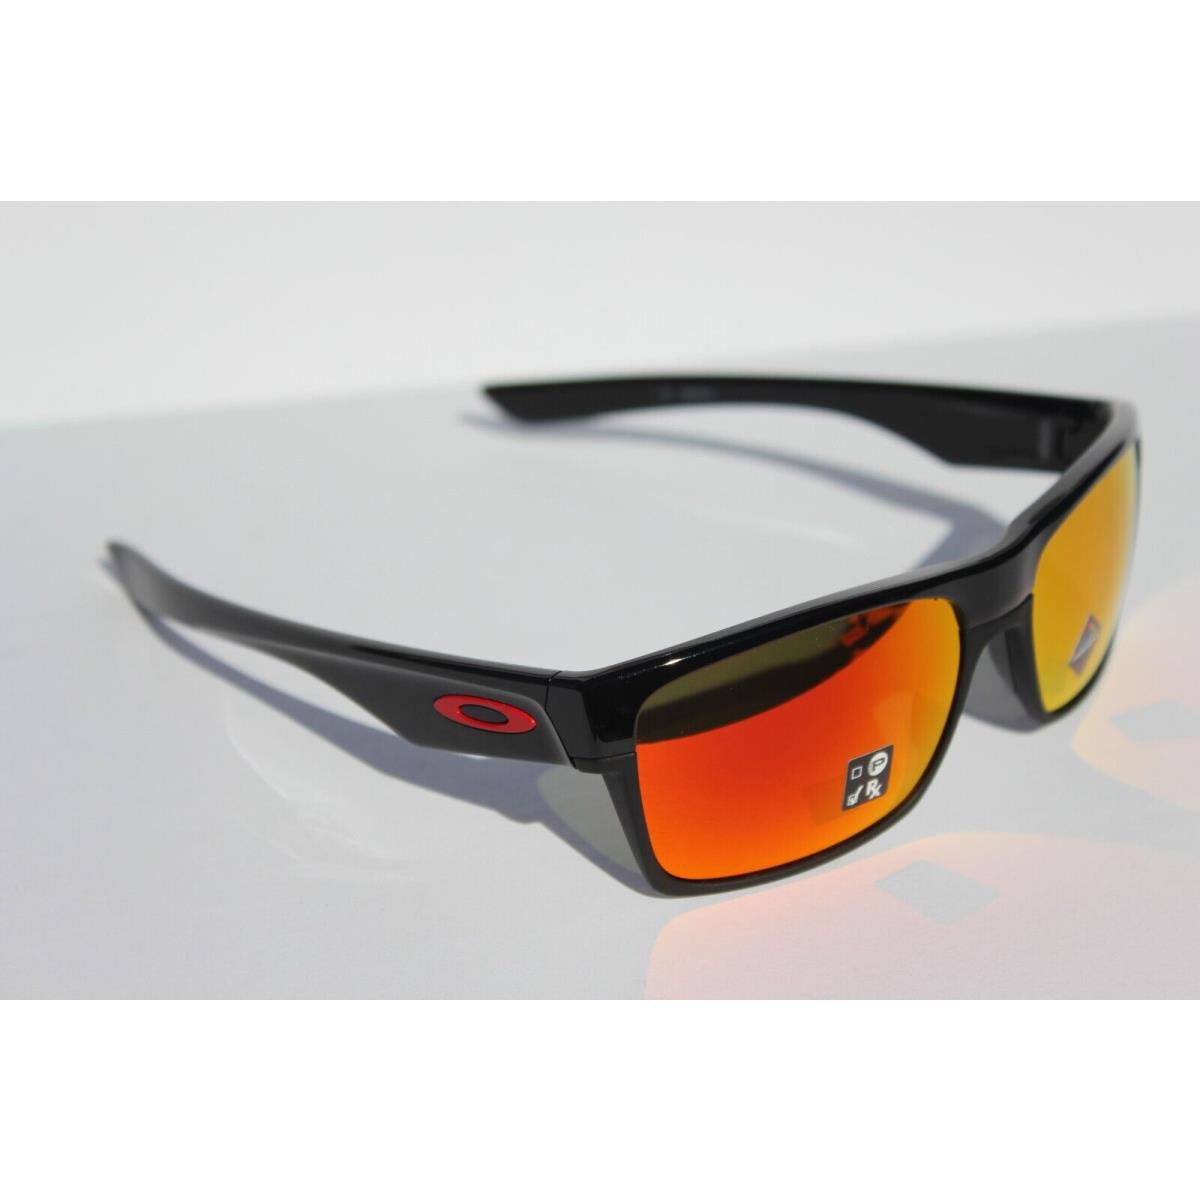 Oakley sunglasses Twoface - Black Frame, Ruby Lens 3